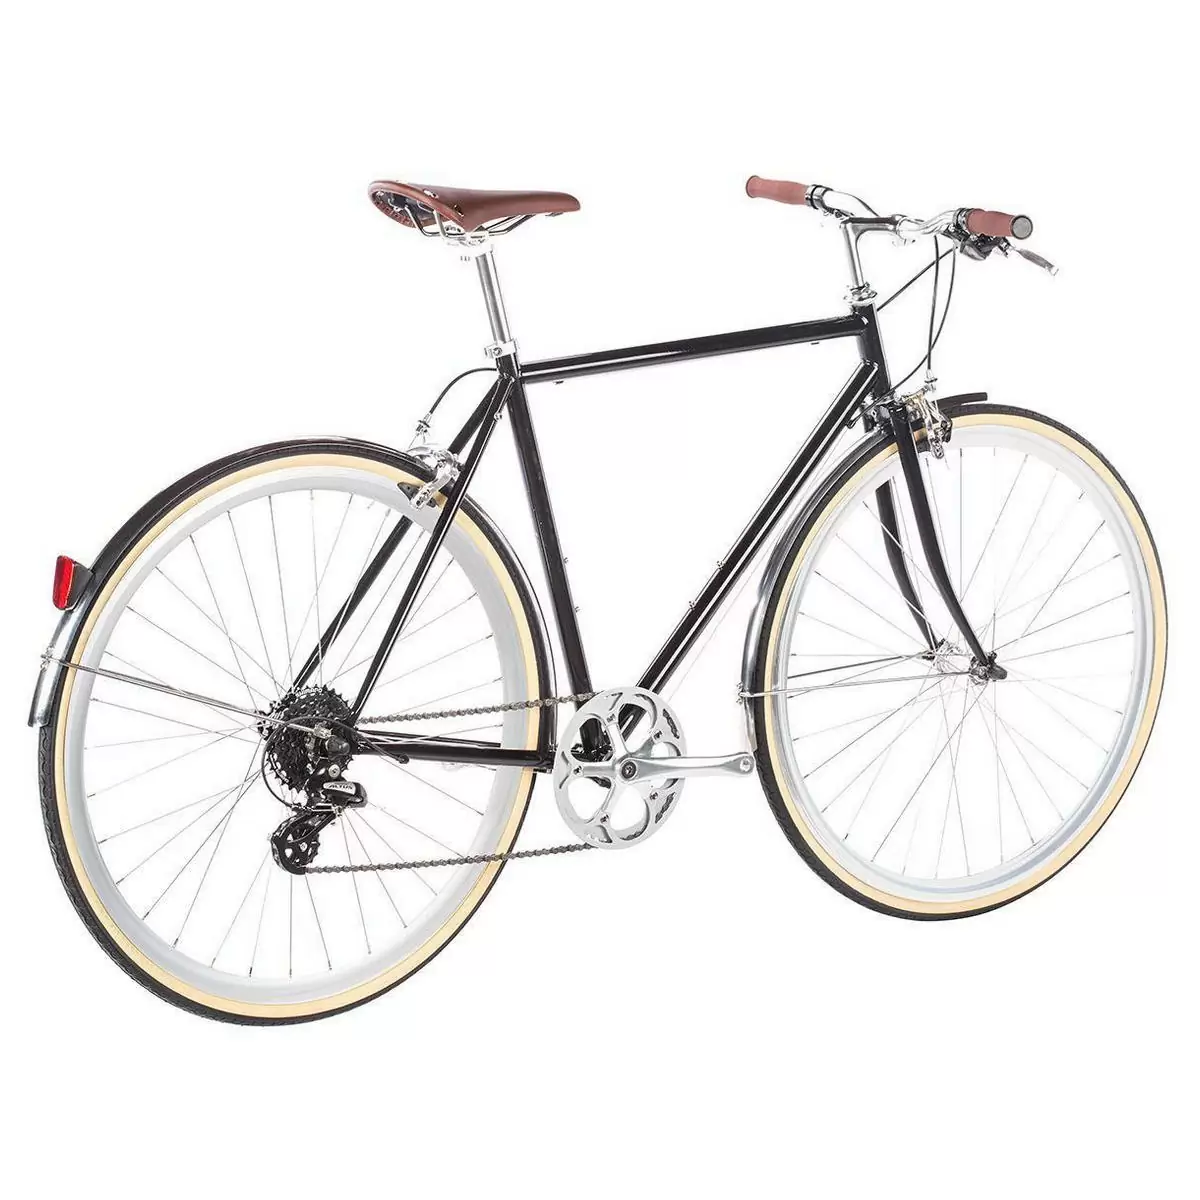 Bicicleta urbana ODYSSEY 8v Delano negra grande 58cm #2